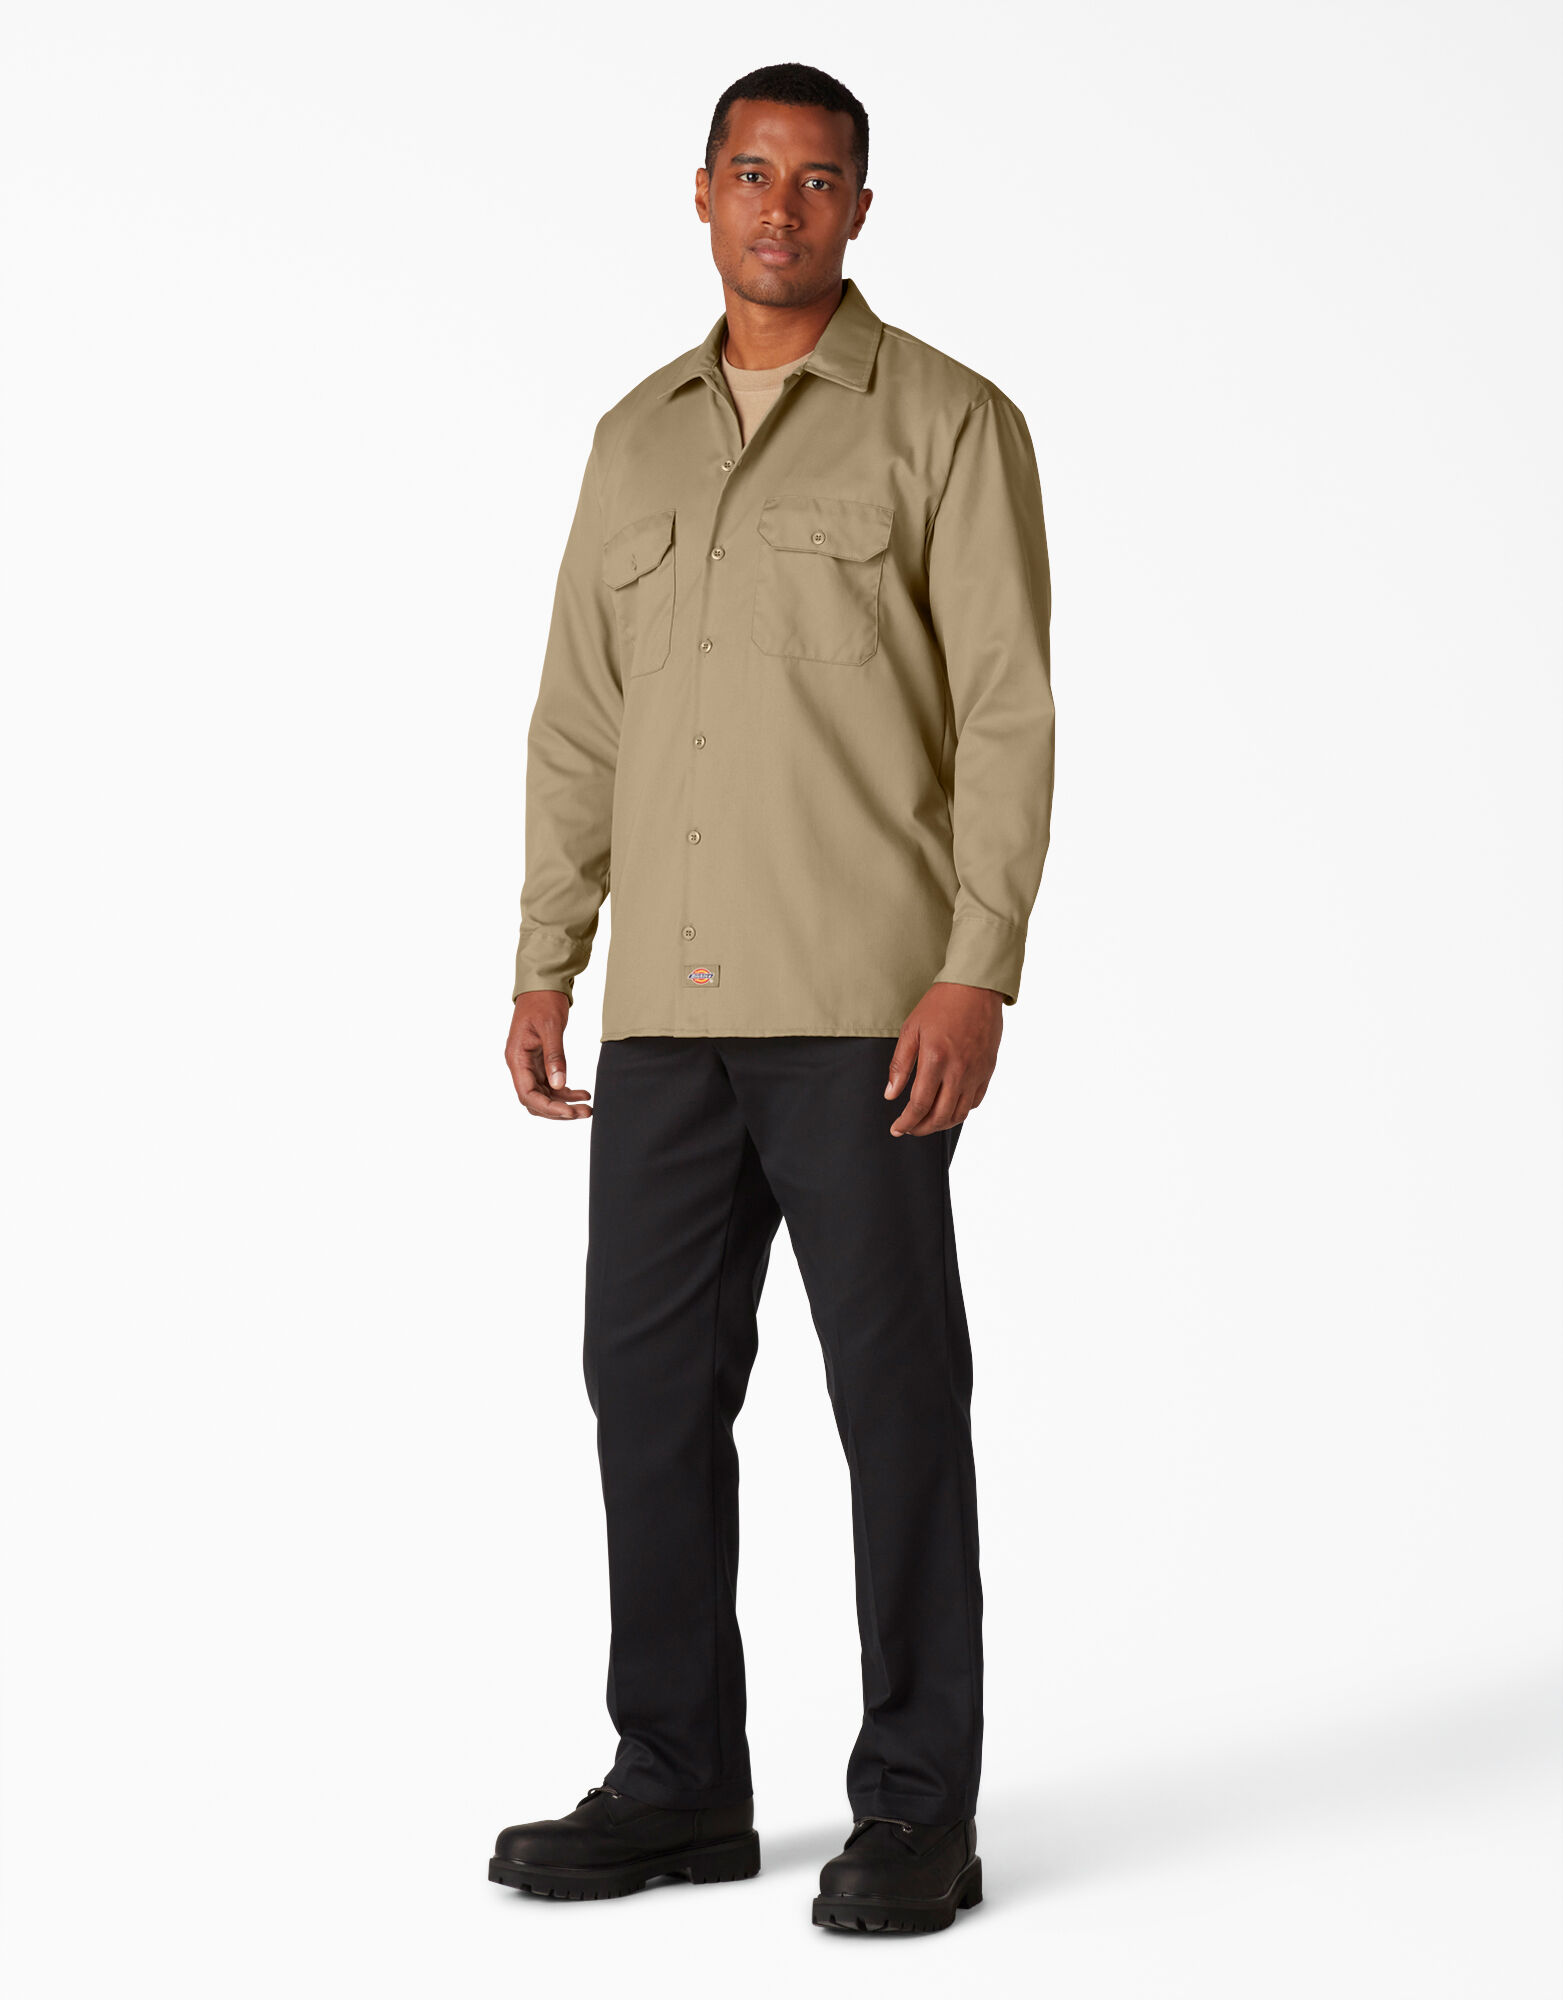 YUNY Men Button-Down-Shirts Solid Work Wear Military Dress Shirts Khaki L 